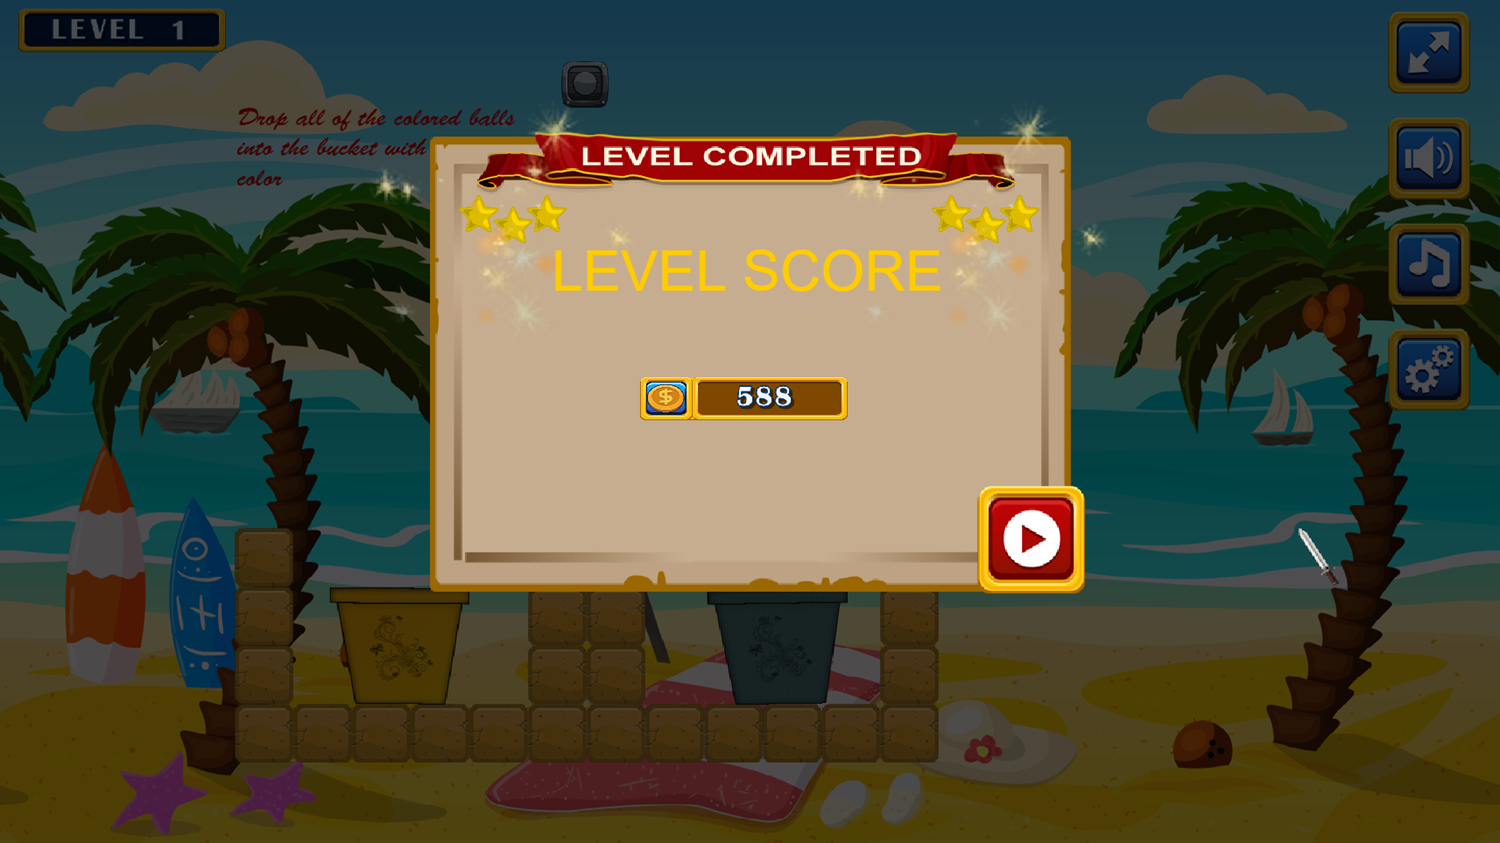 Beachball Fun Game Level Complete Screenshot.